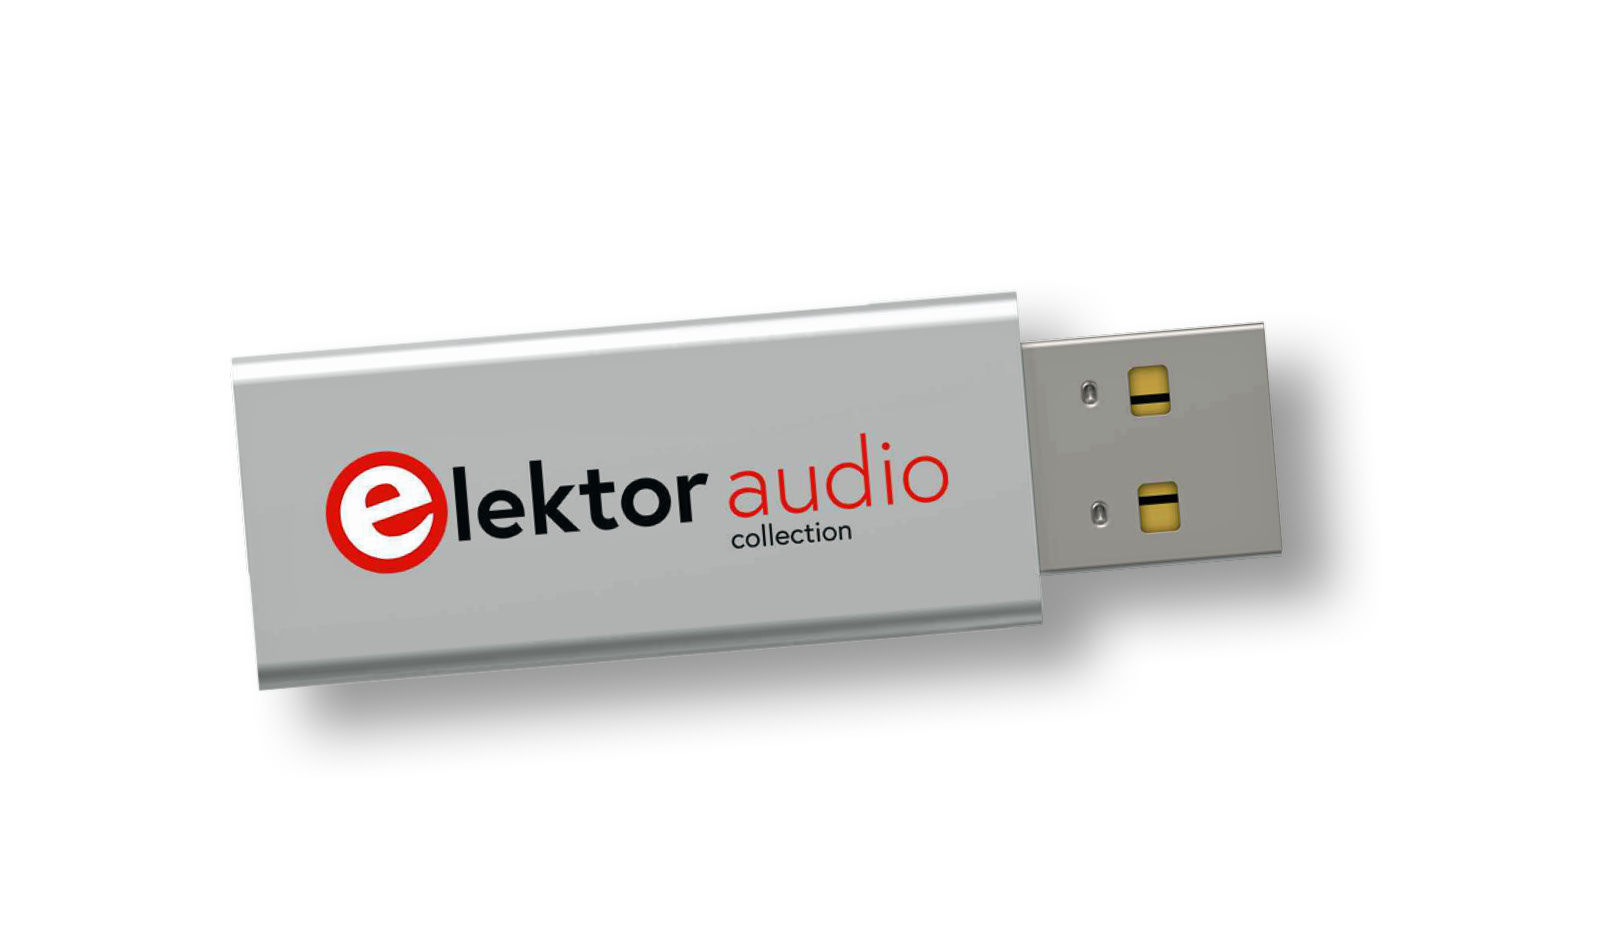 elektor-audio-collection-usb-stick.png